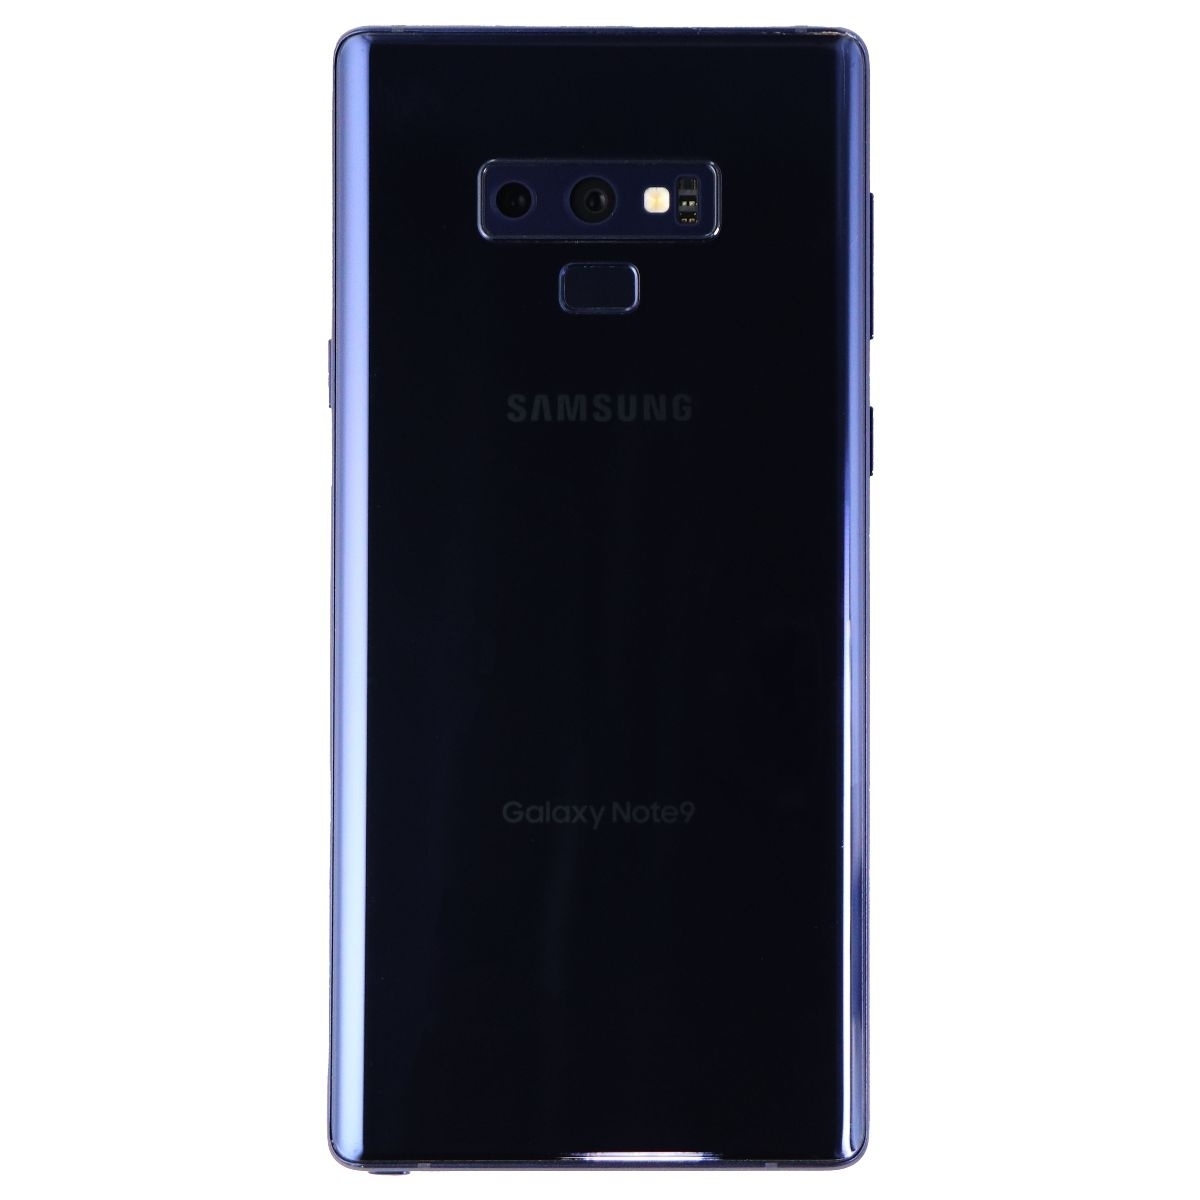 Samsung Galaxy Note9 Smartphone (SM-N960U) AT&T Only - 128GB / Ocean Blue